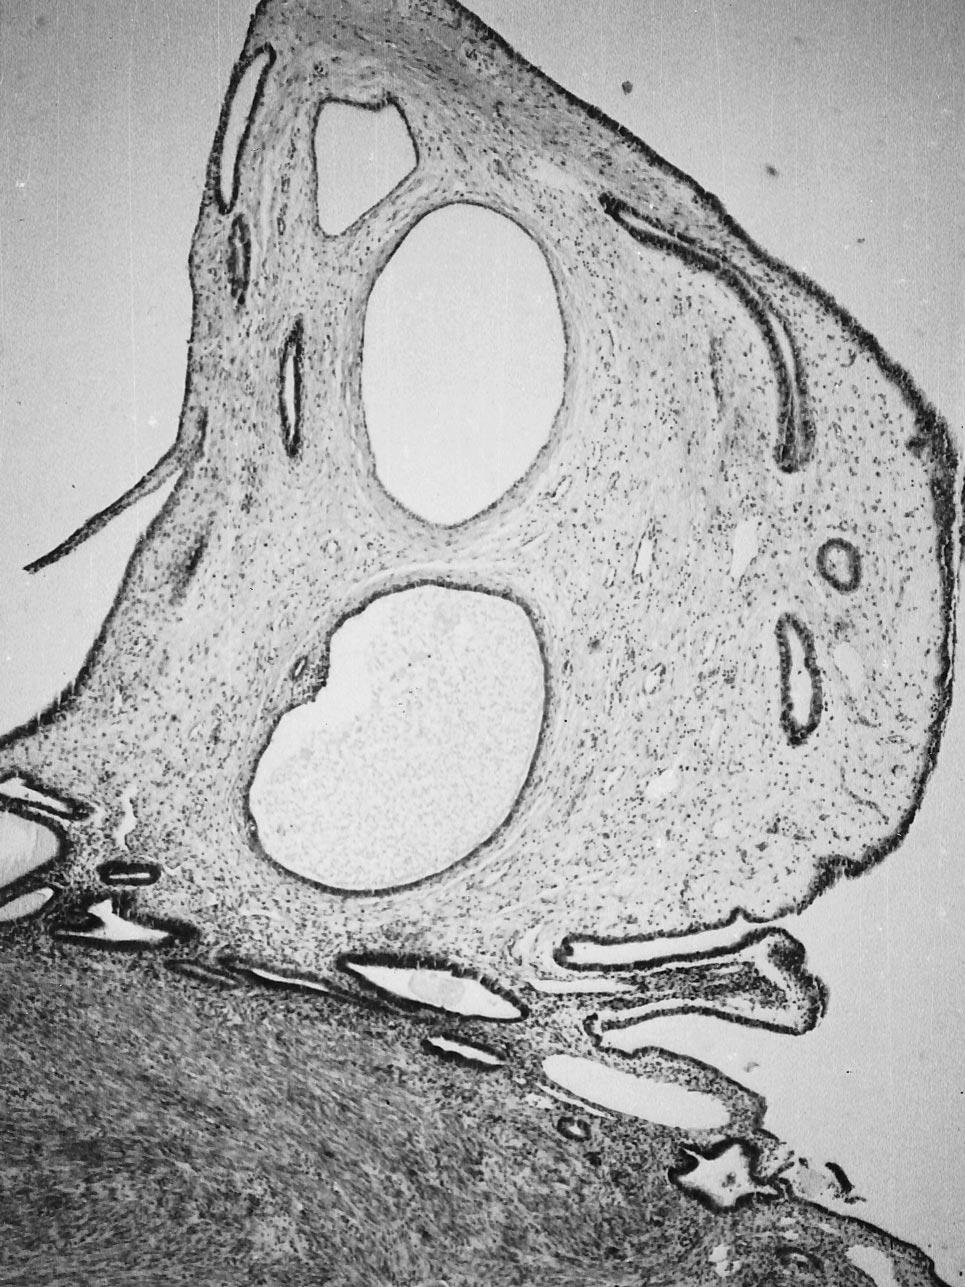 FIGURE 3. Endometrial polyp in hysterectomy specimen.